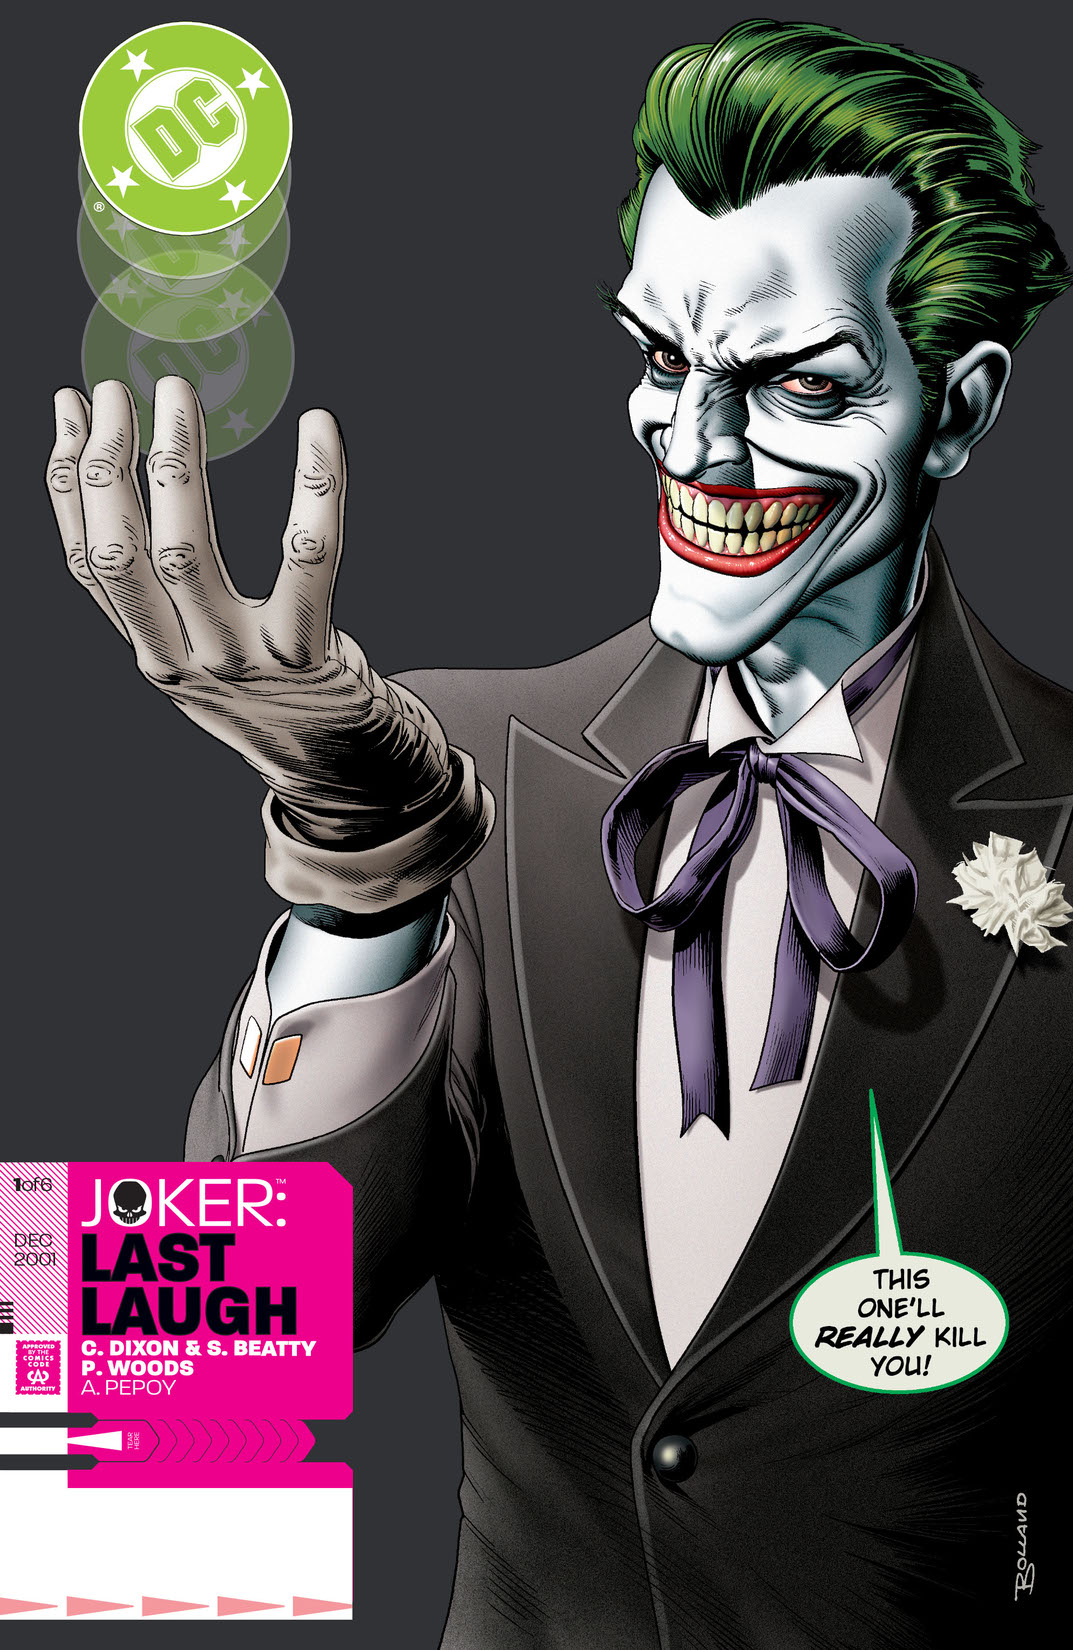 Joker instal the last version for ipod